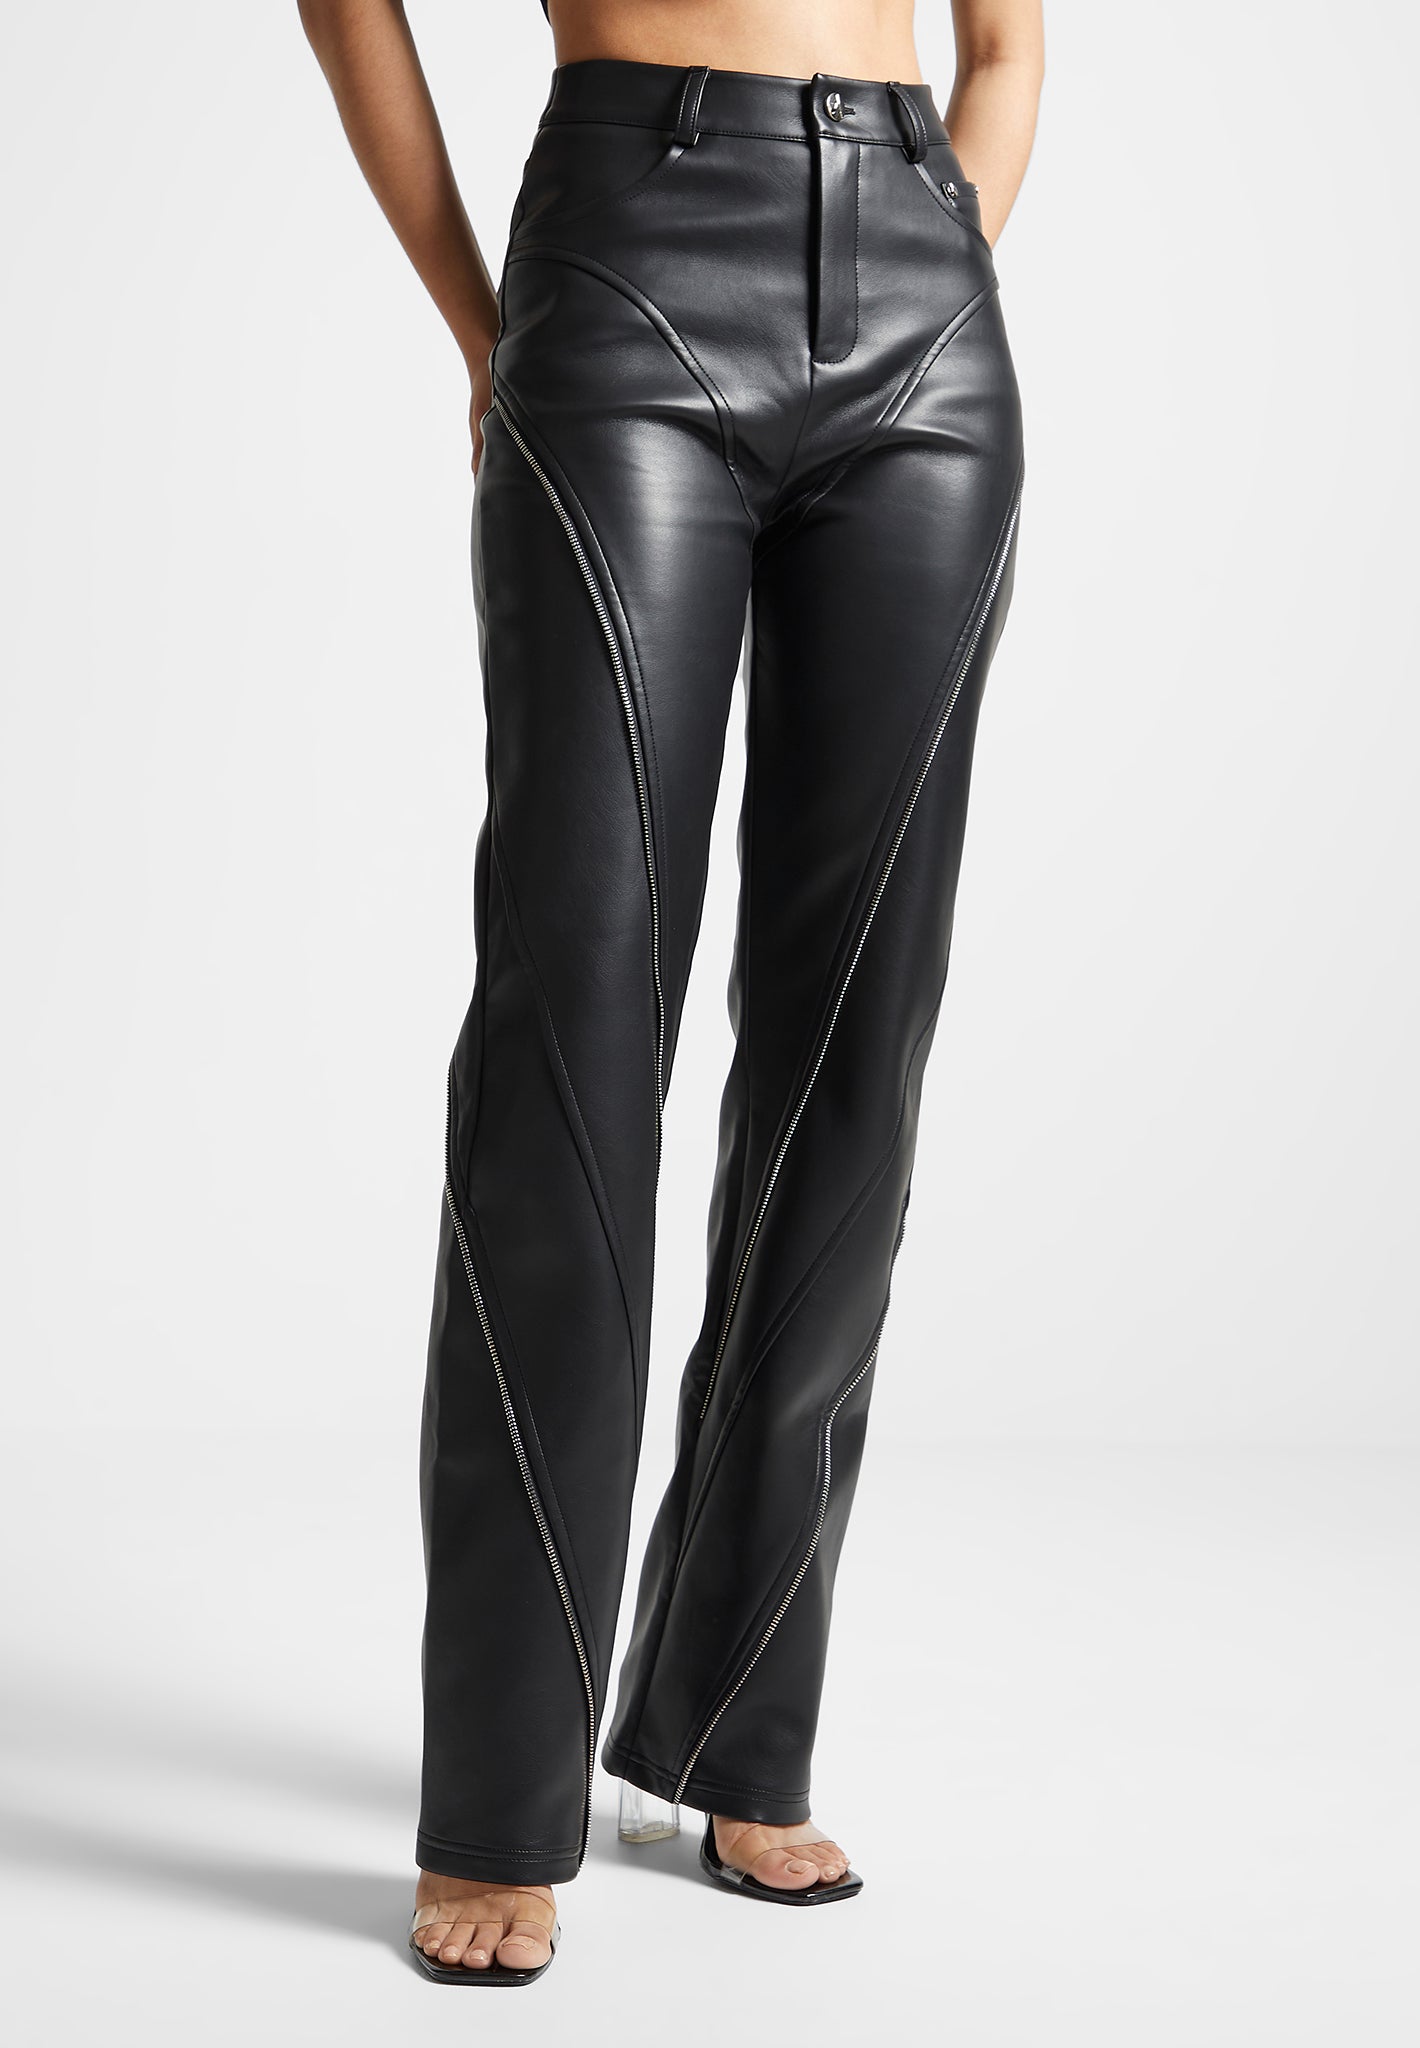 EDIKTED Luna Faux Leather Womens Flare Pants - BLACK